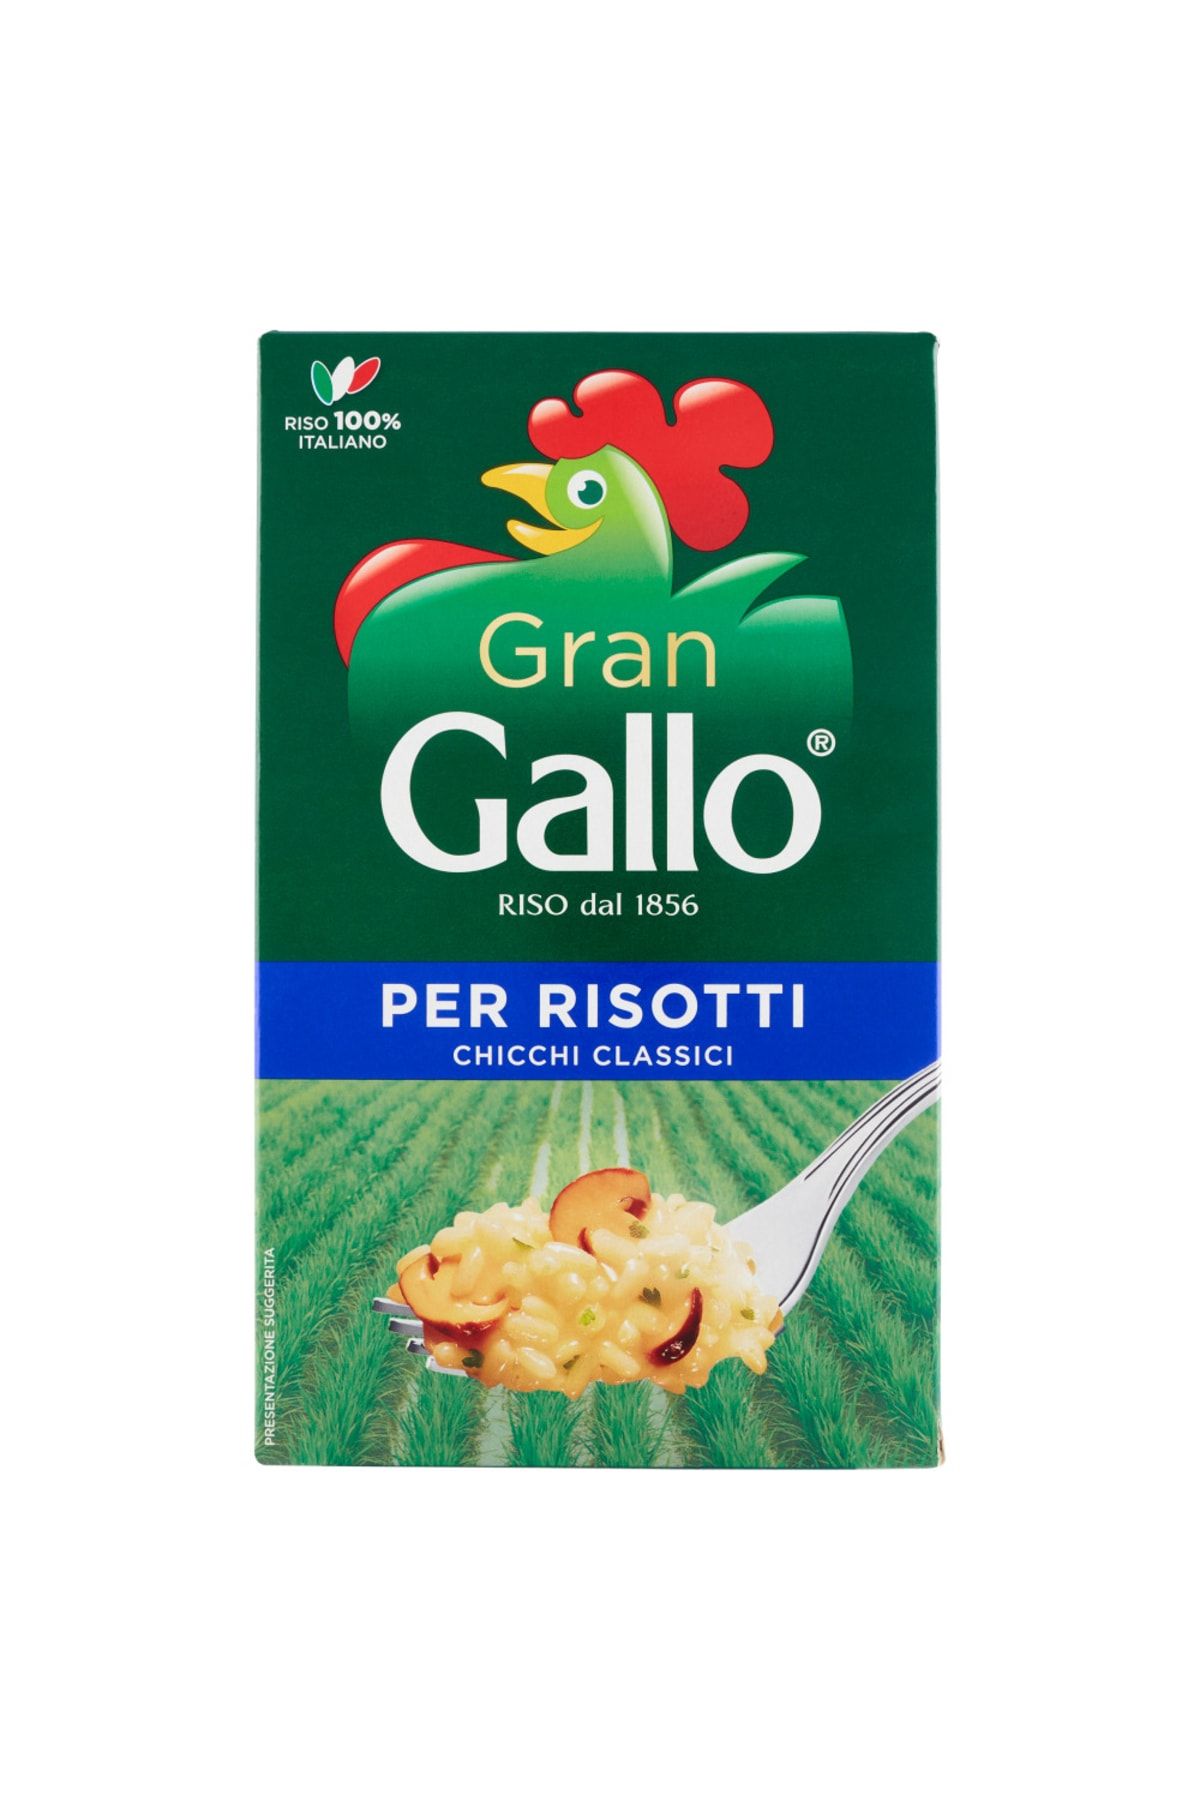 Gallo Gran Per Rısottı 1 Kg